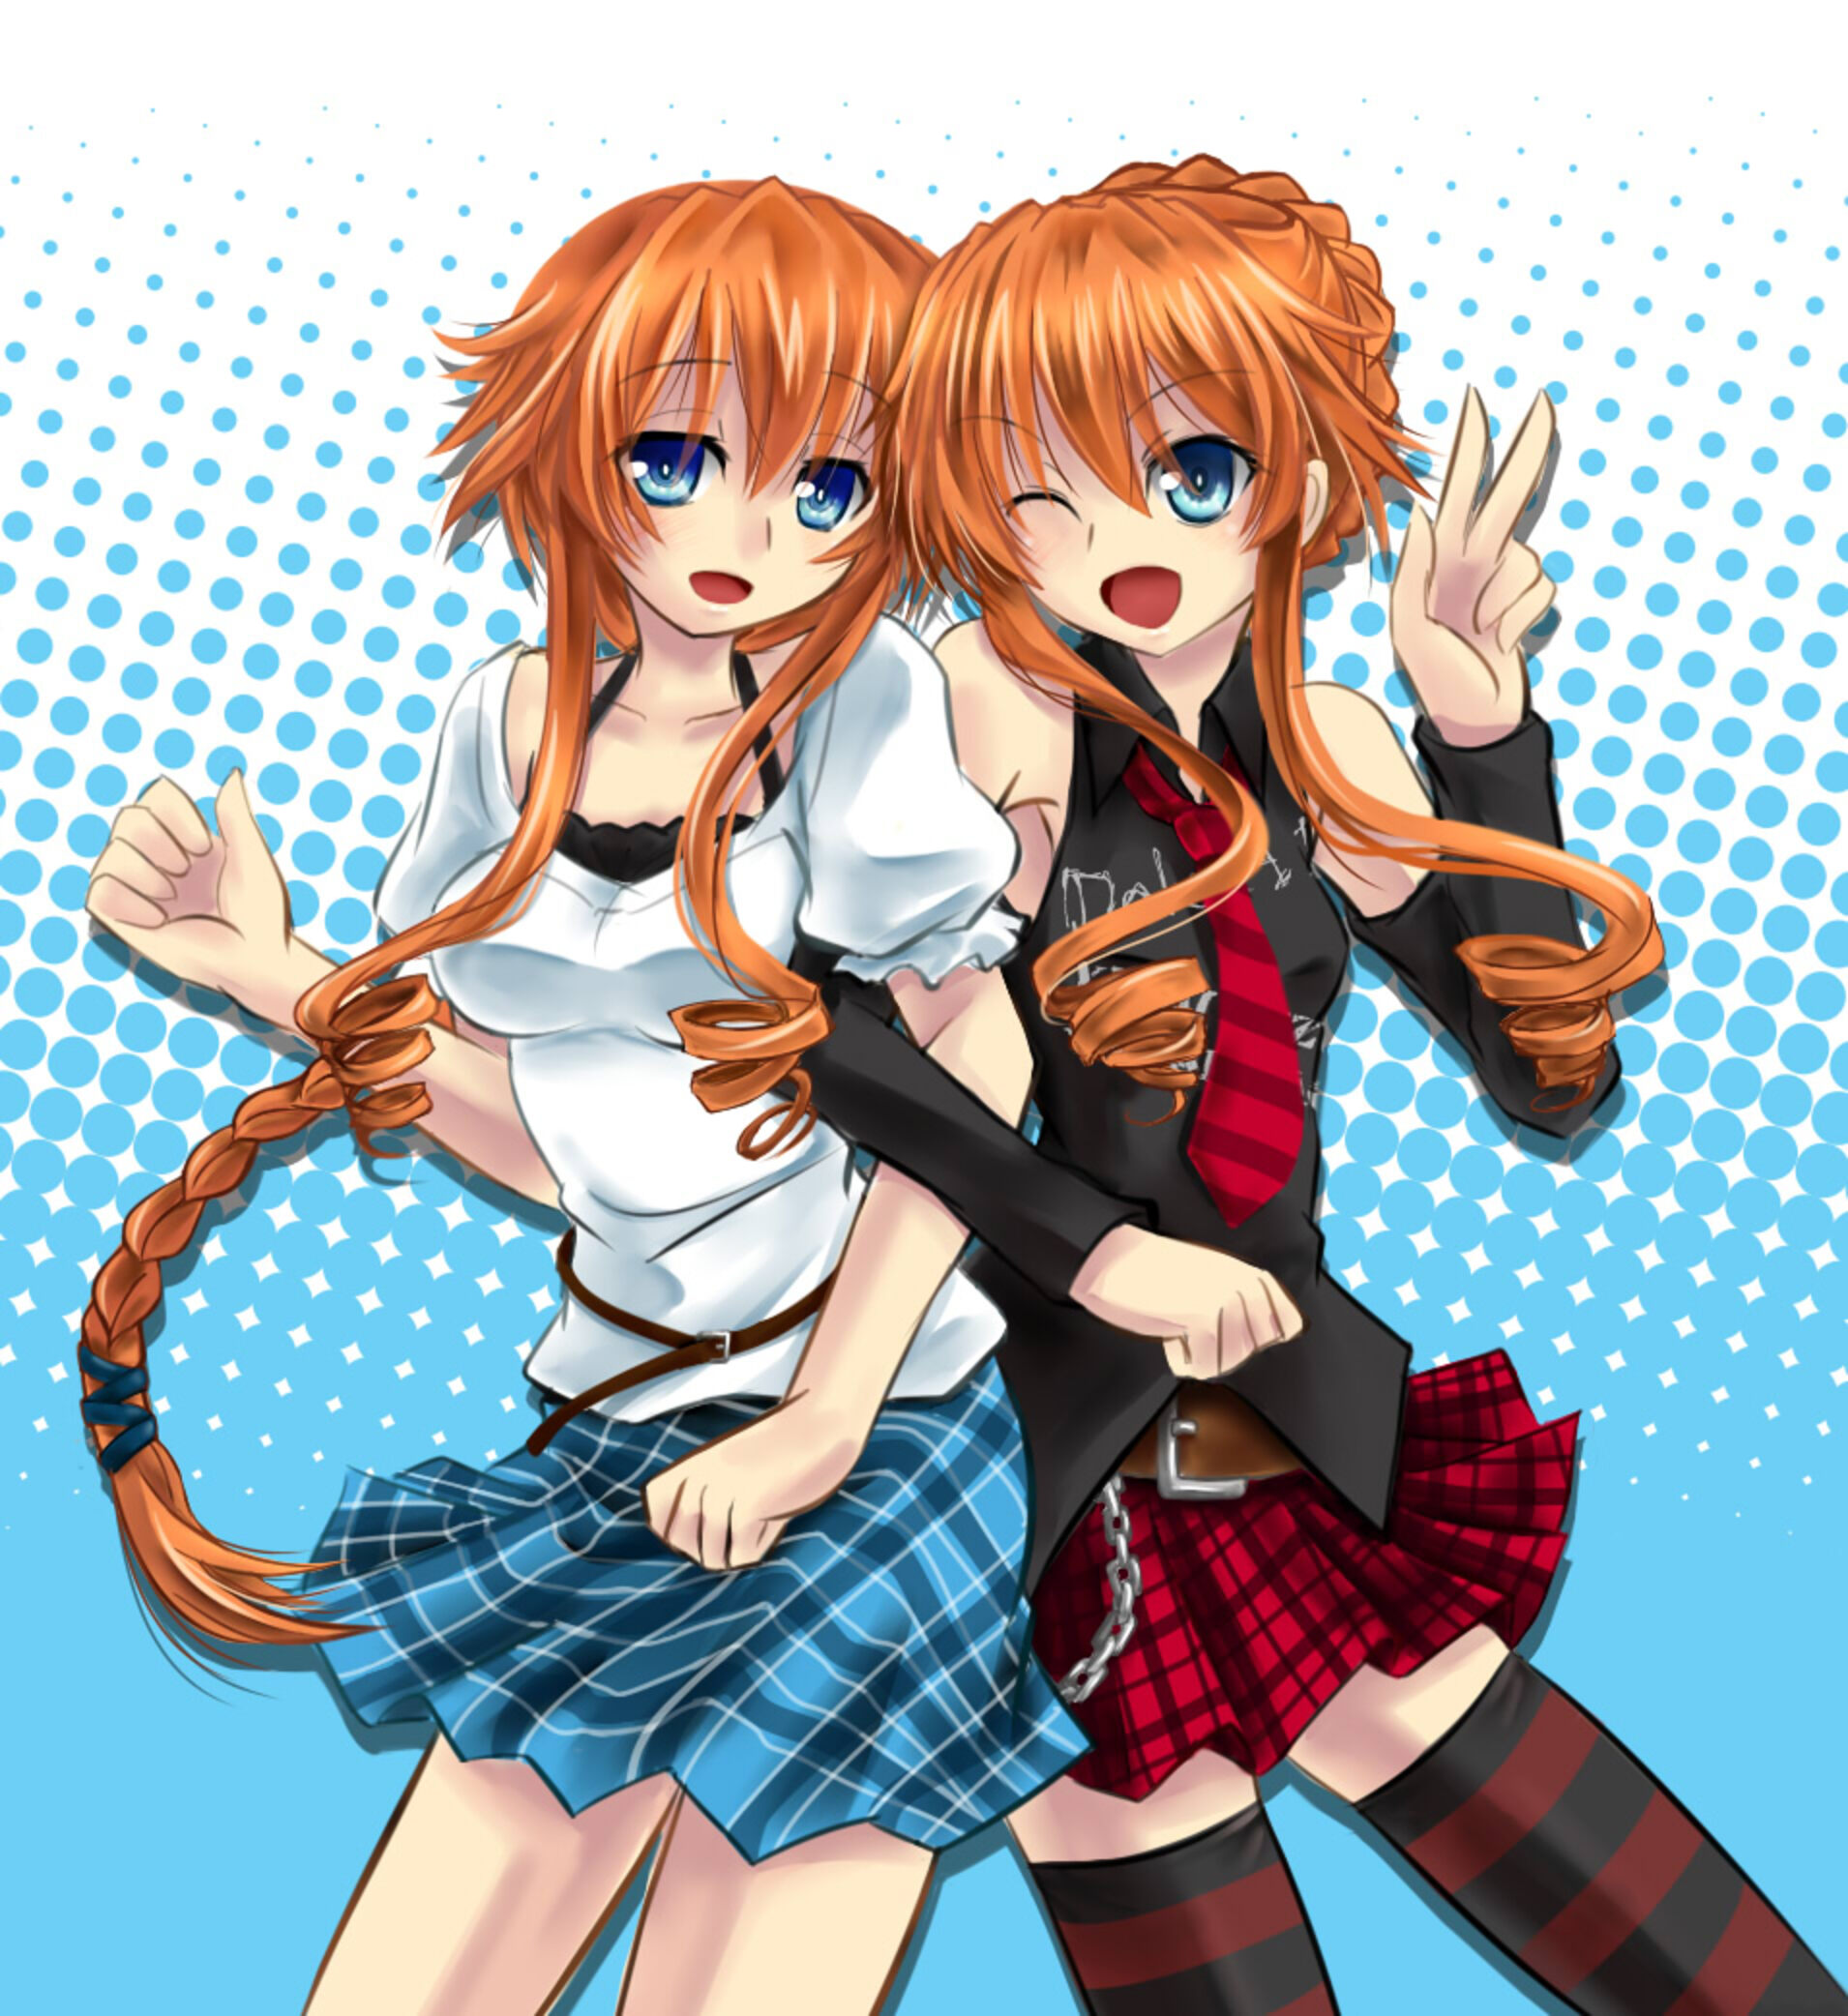 Anime 1910x2084 anime anime girls Date A Live Yamai Kaguya Yamai Yuzuru braids redhead artwork digital art fan art twins